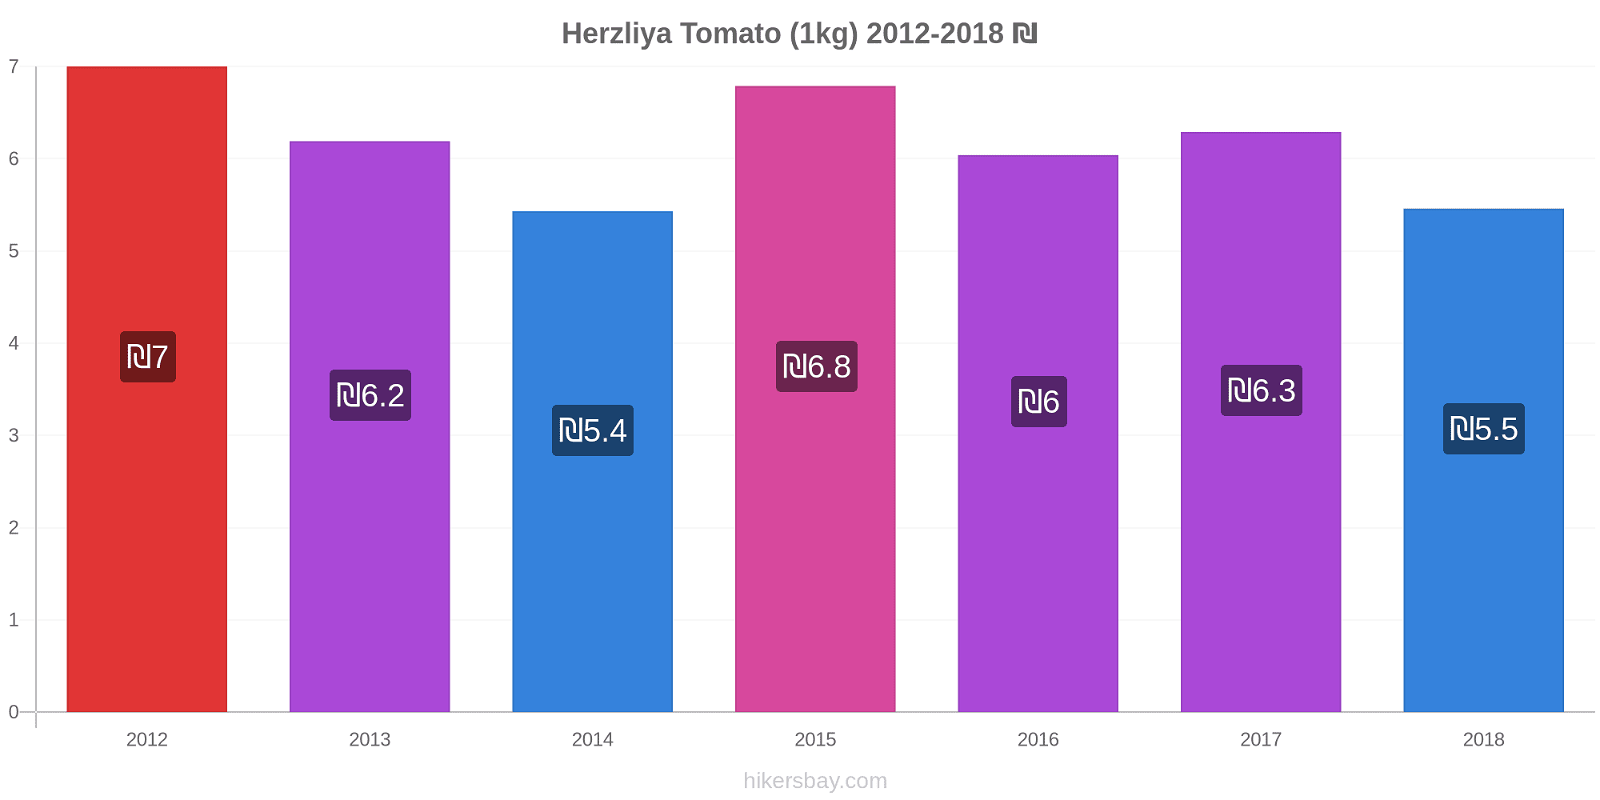 Herzliya price changes Tomato (1kg) hikersbay.com